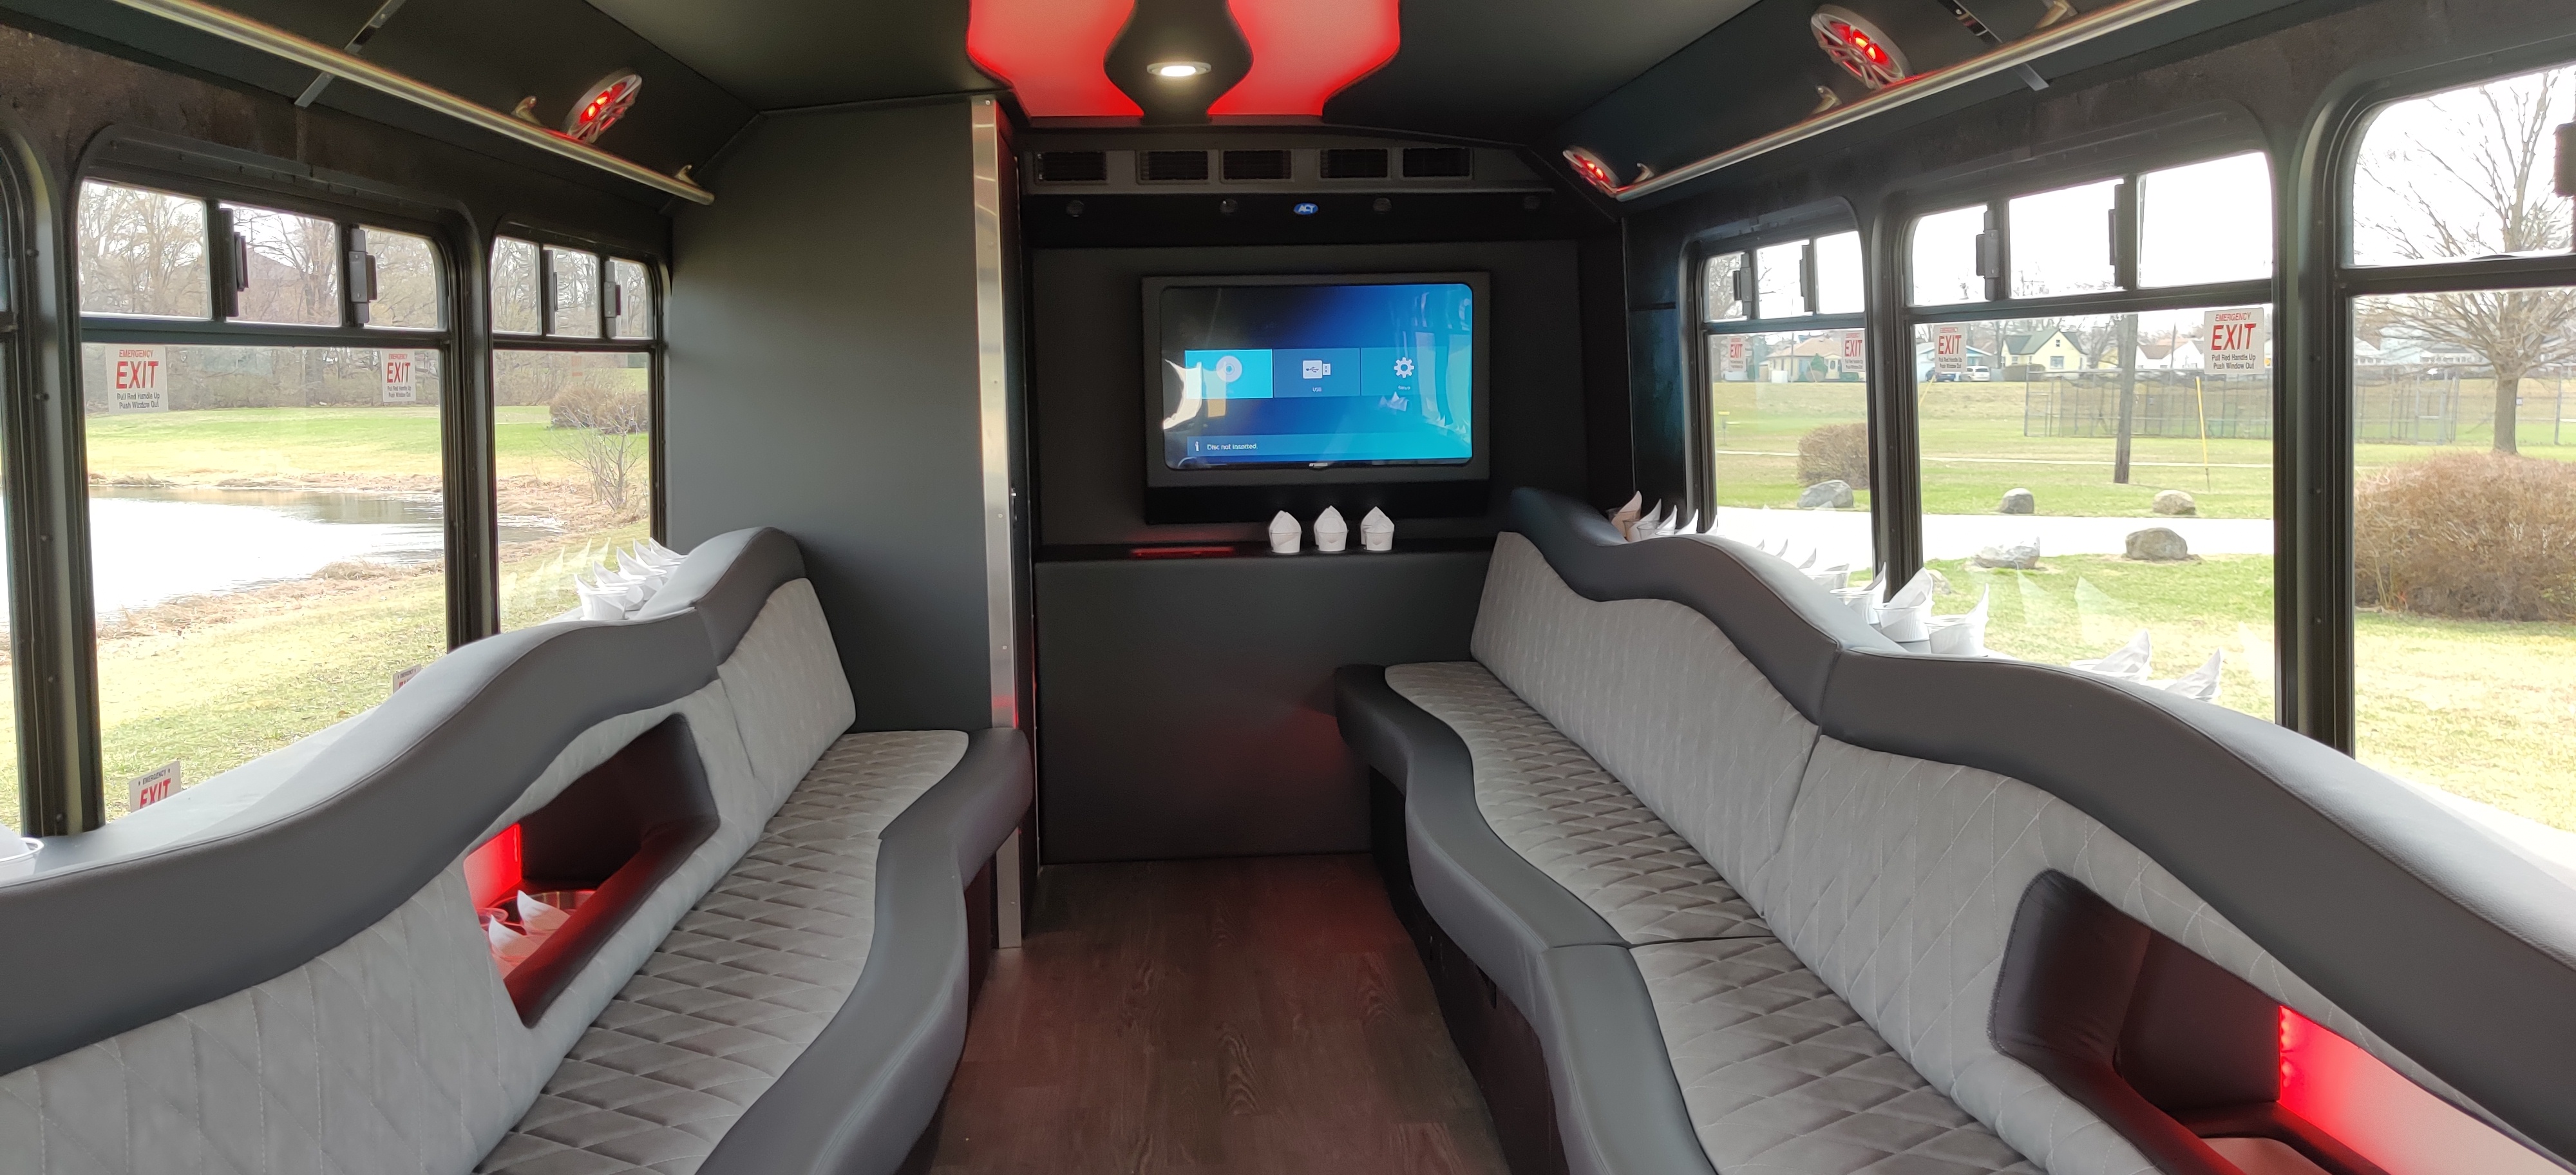 21 Passenger Luxury Limo Bus Interior